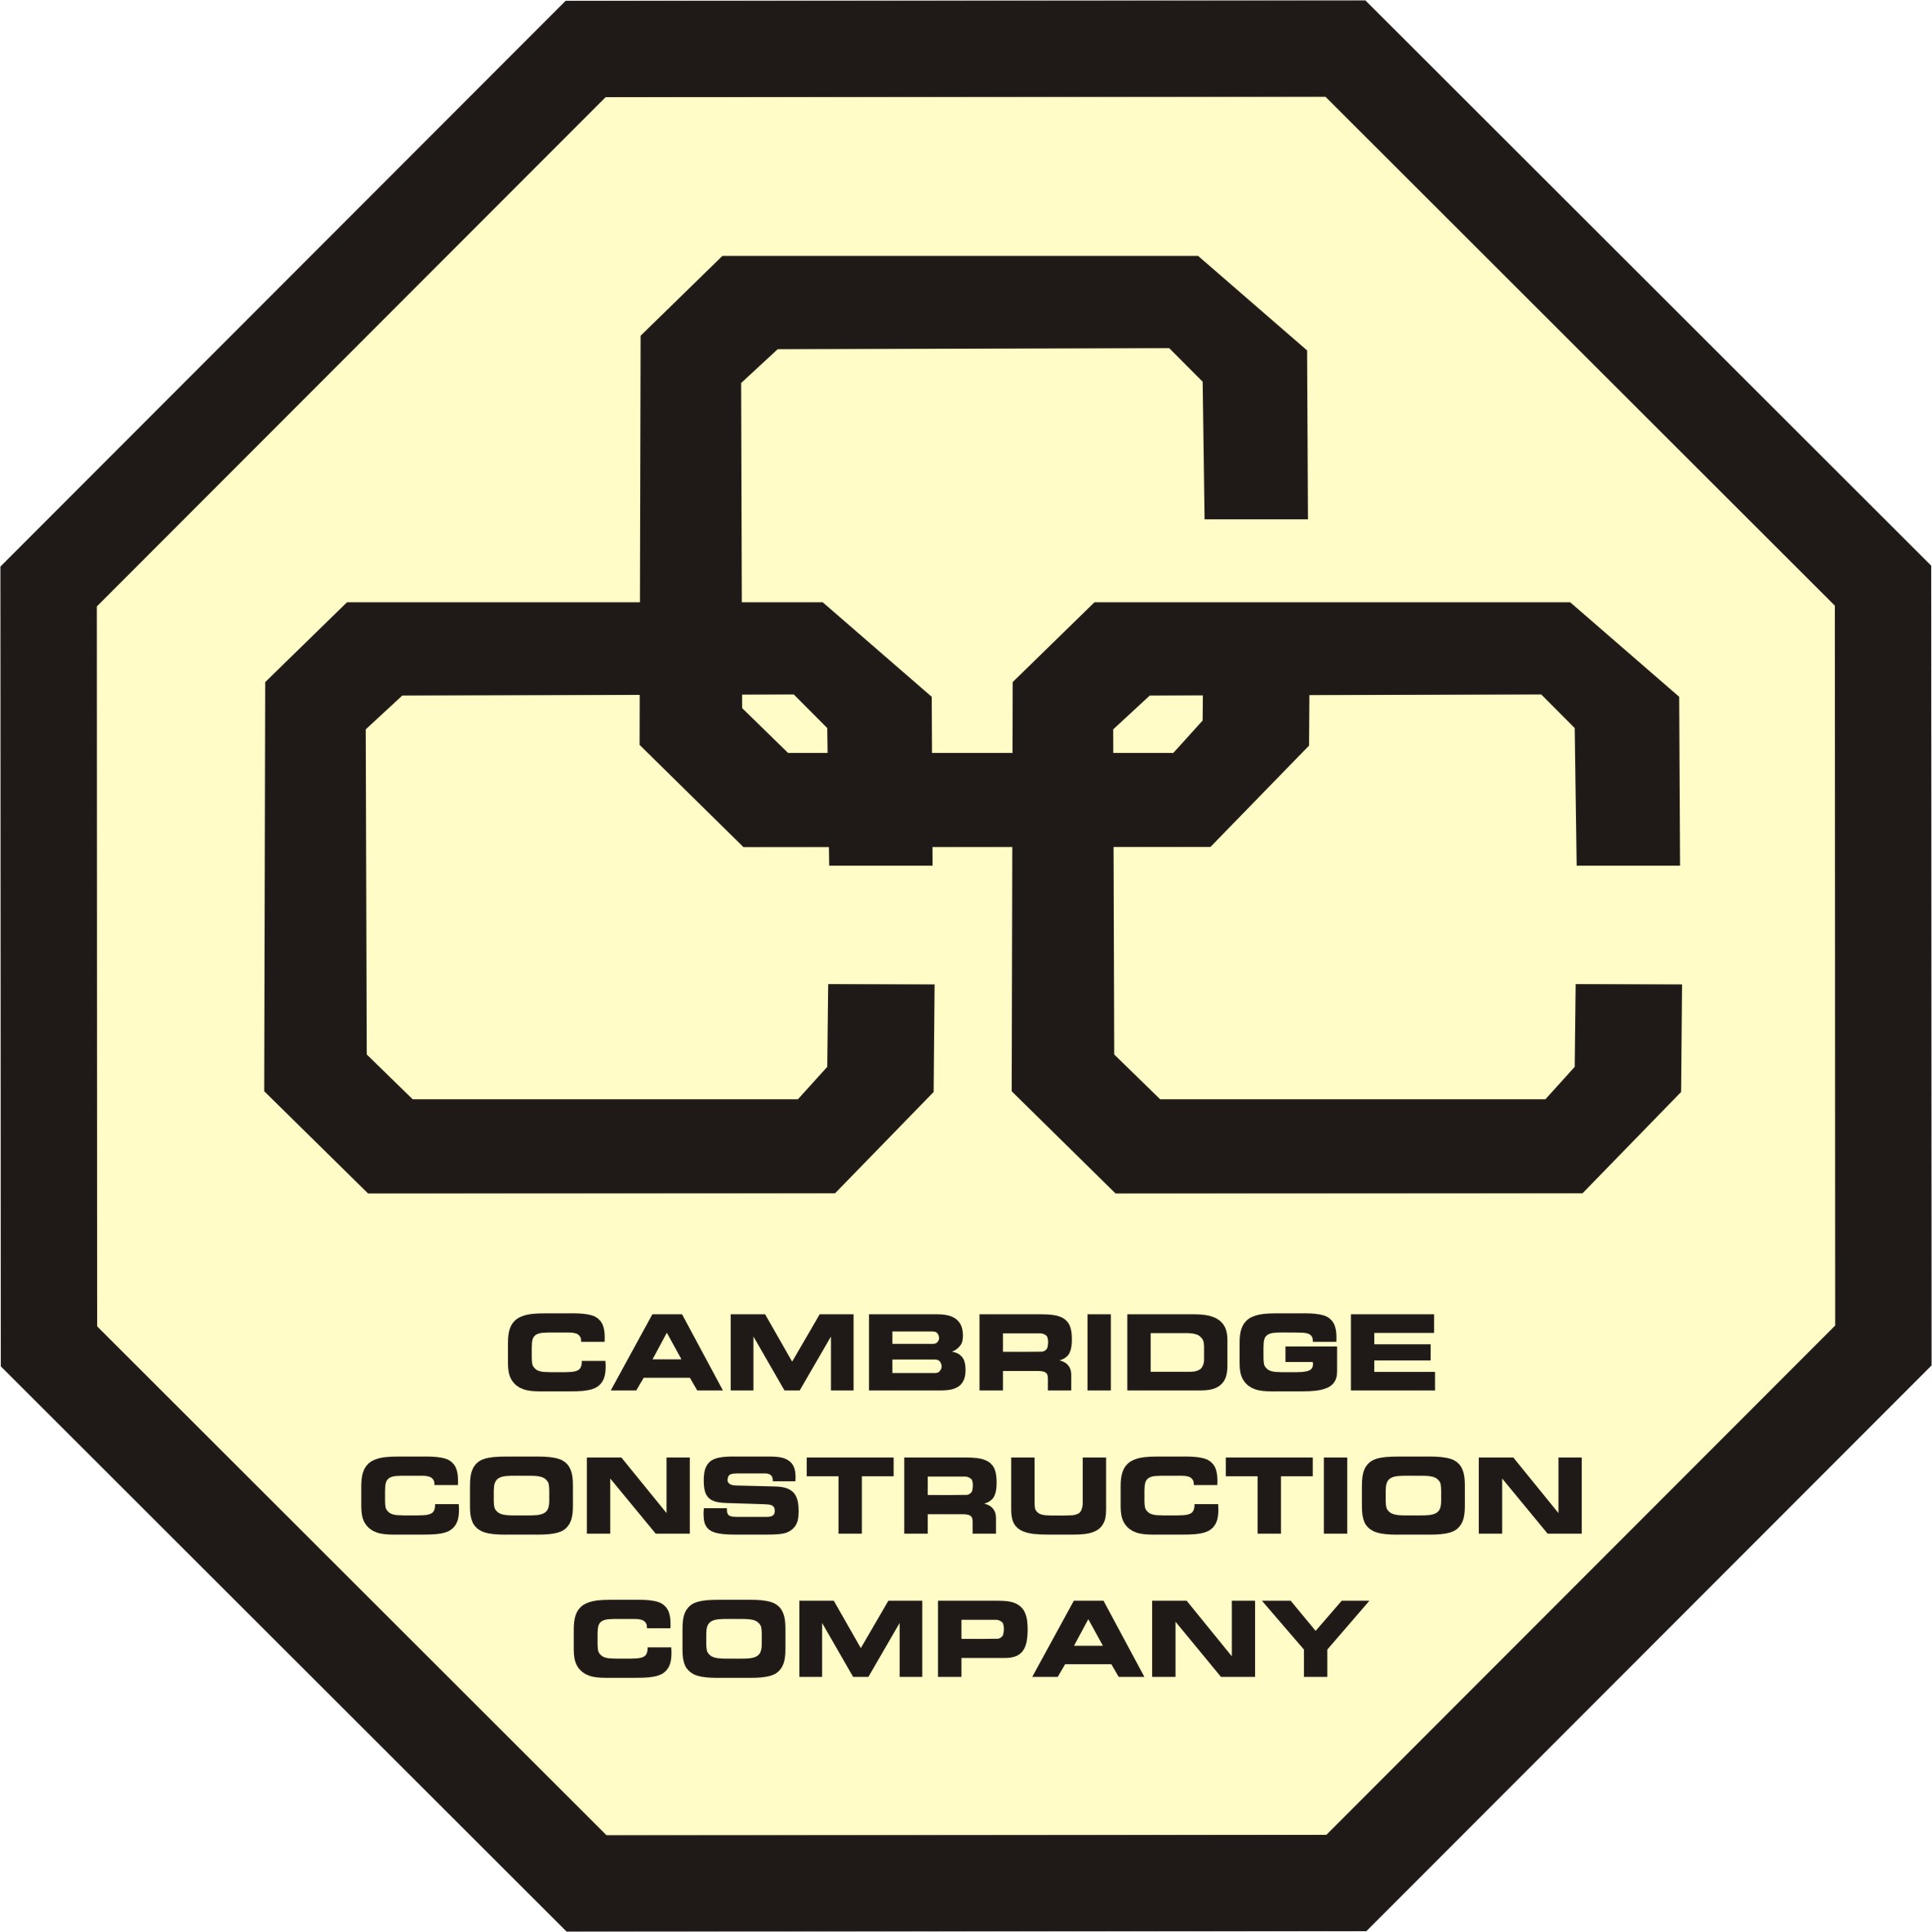 Cambridge Construction Company Limited